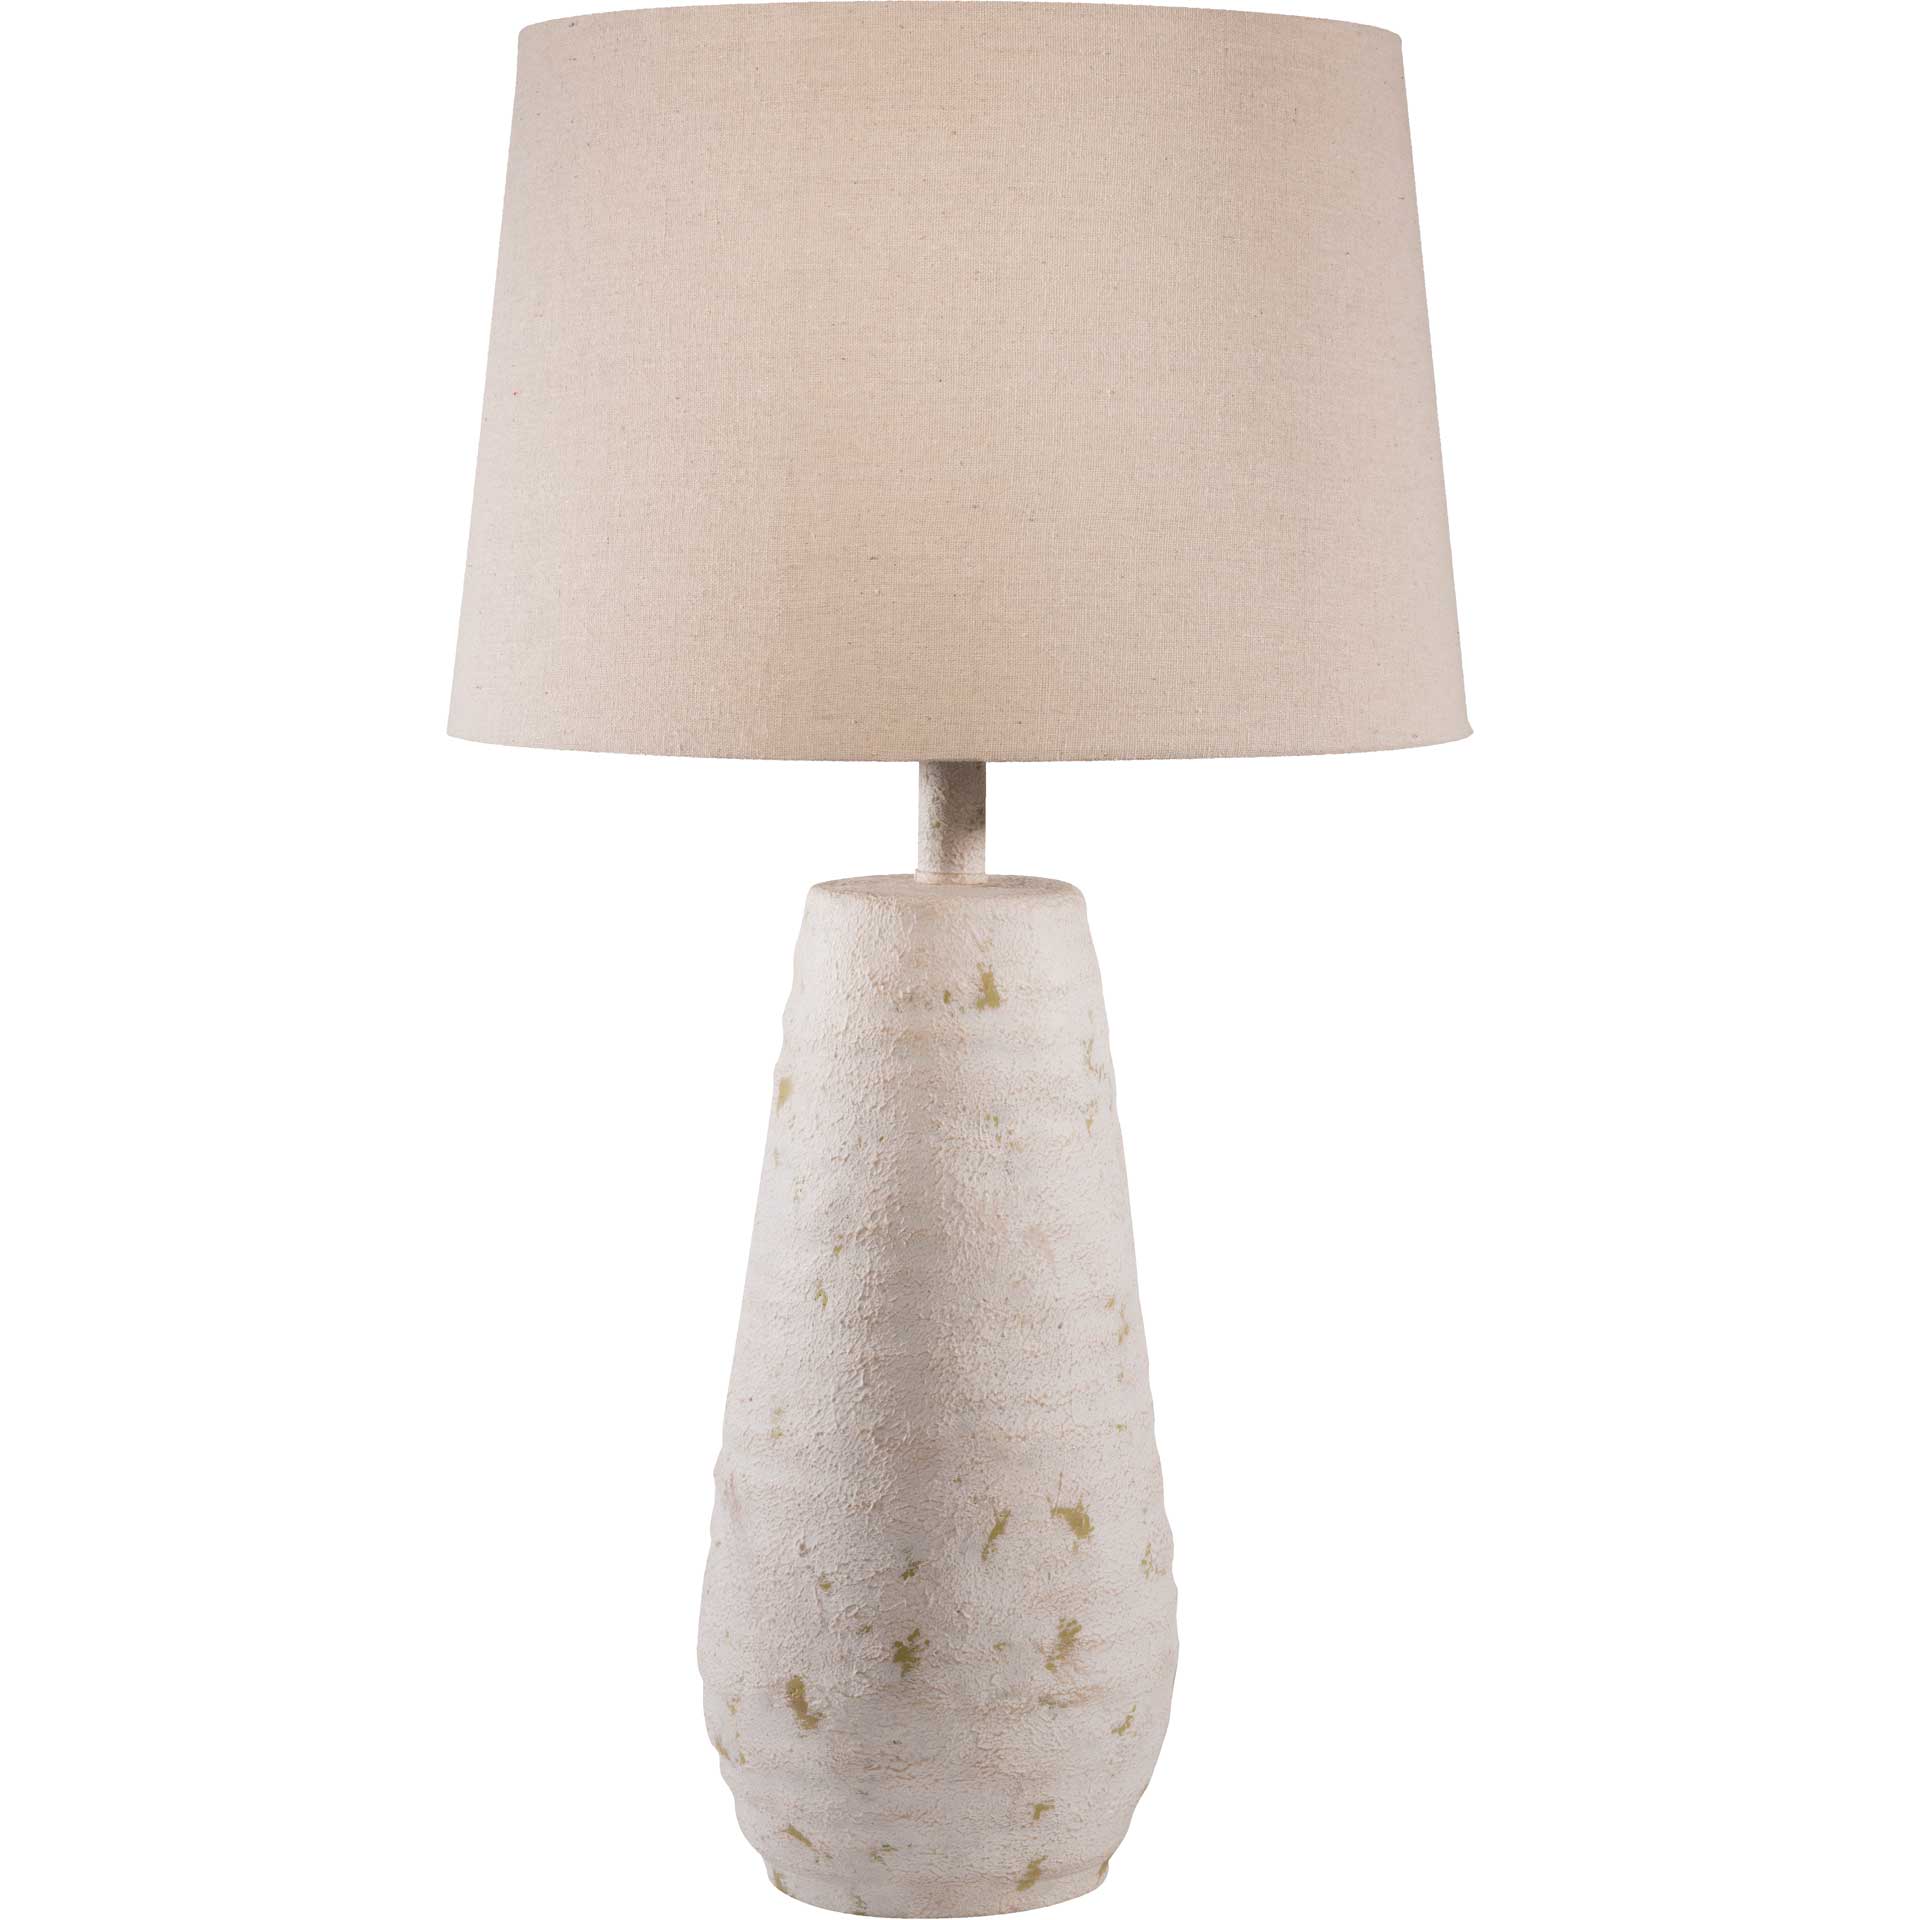 Morello Table Lamp Ivory/White/Natural